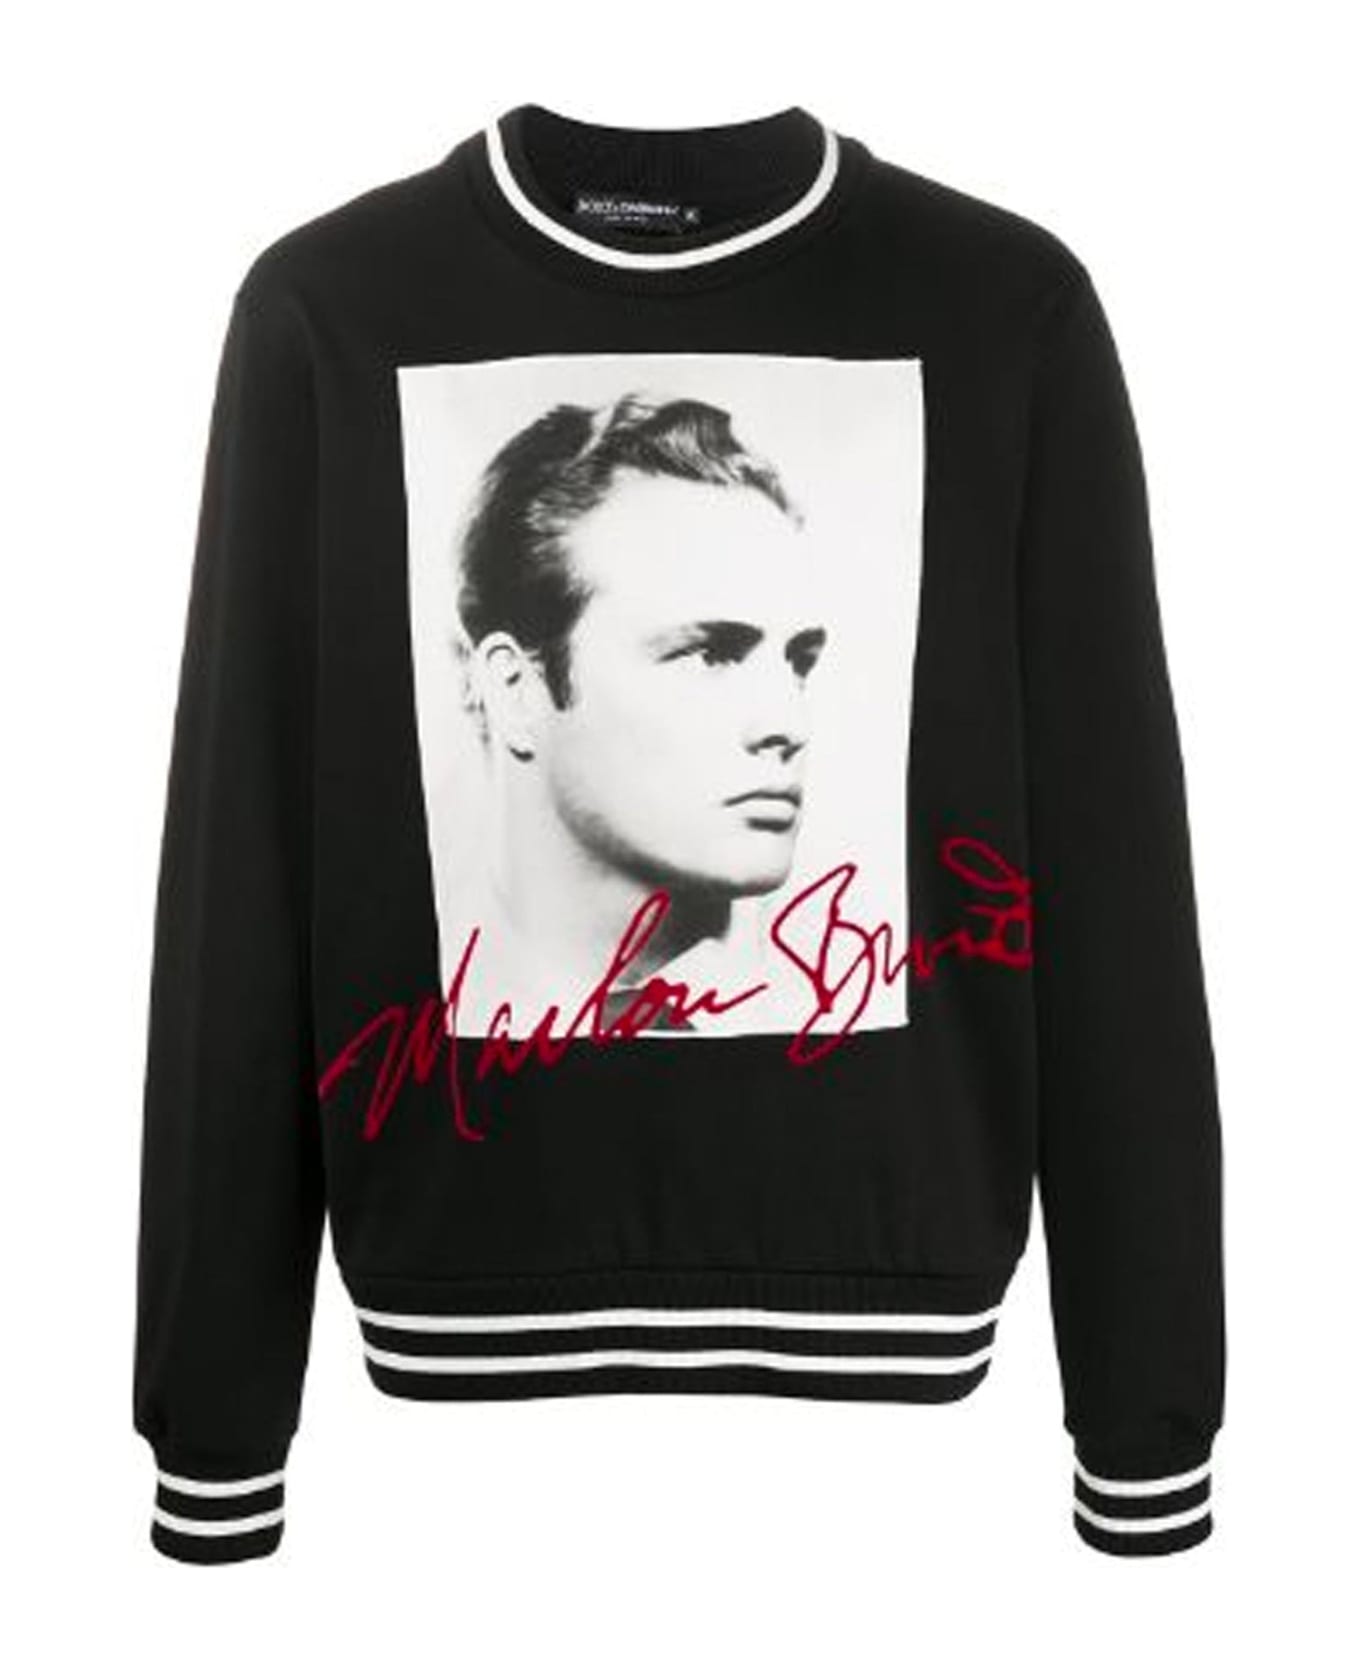 Dolce Logo & Gabbana Marlon Brando Sweatshirt - Black